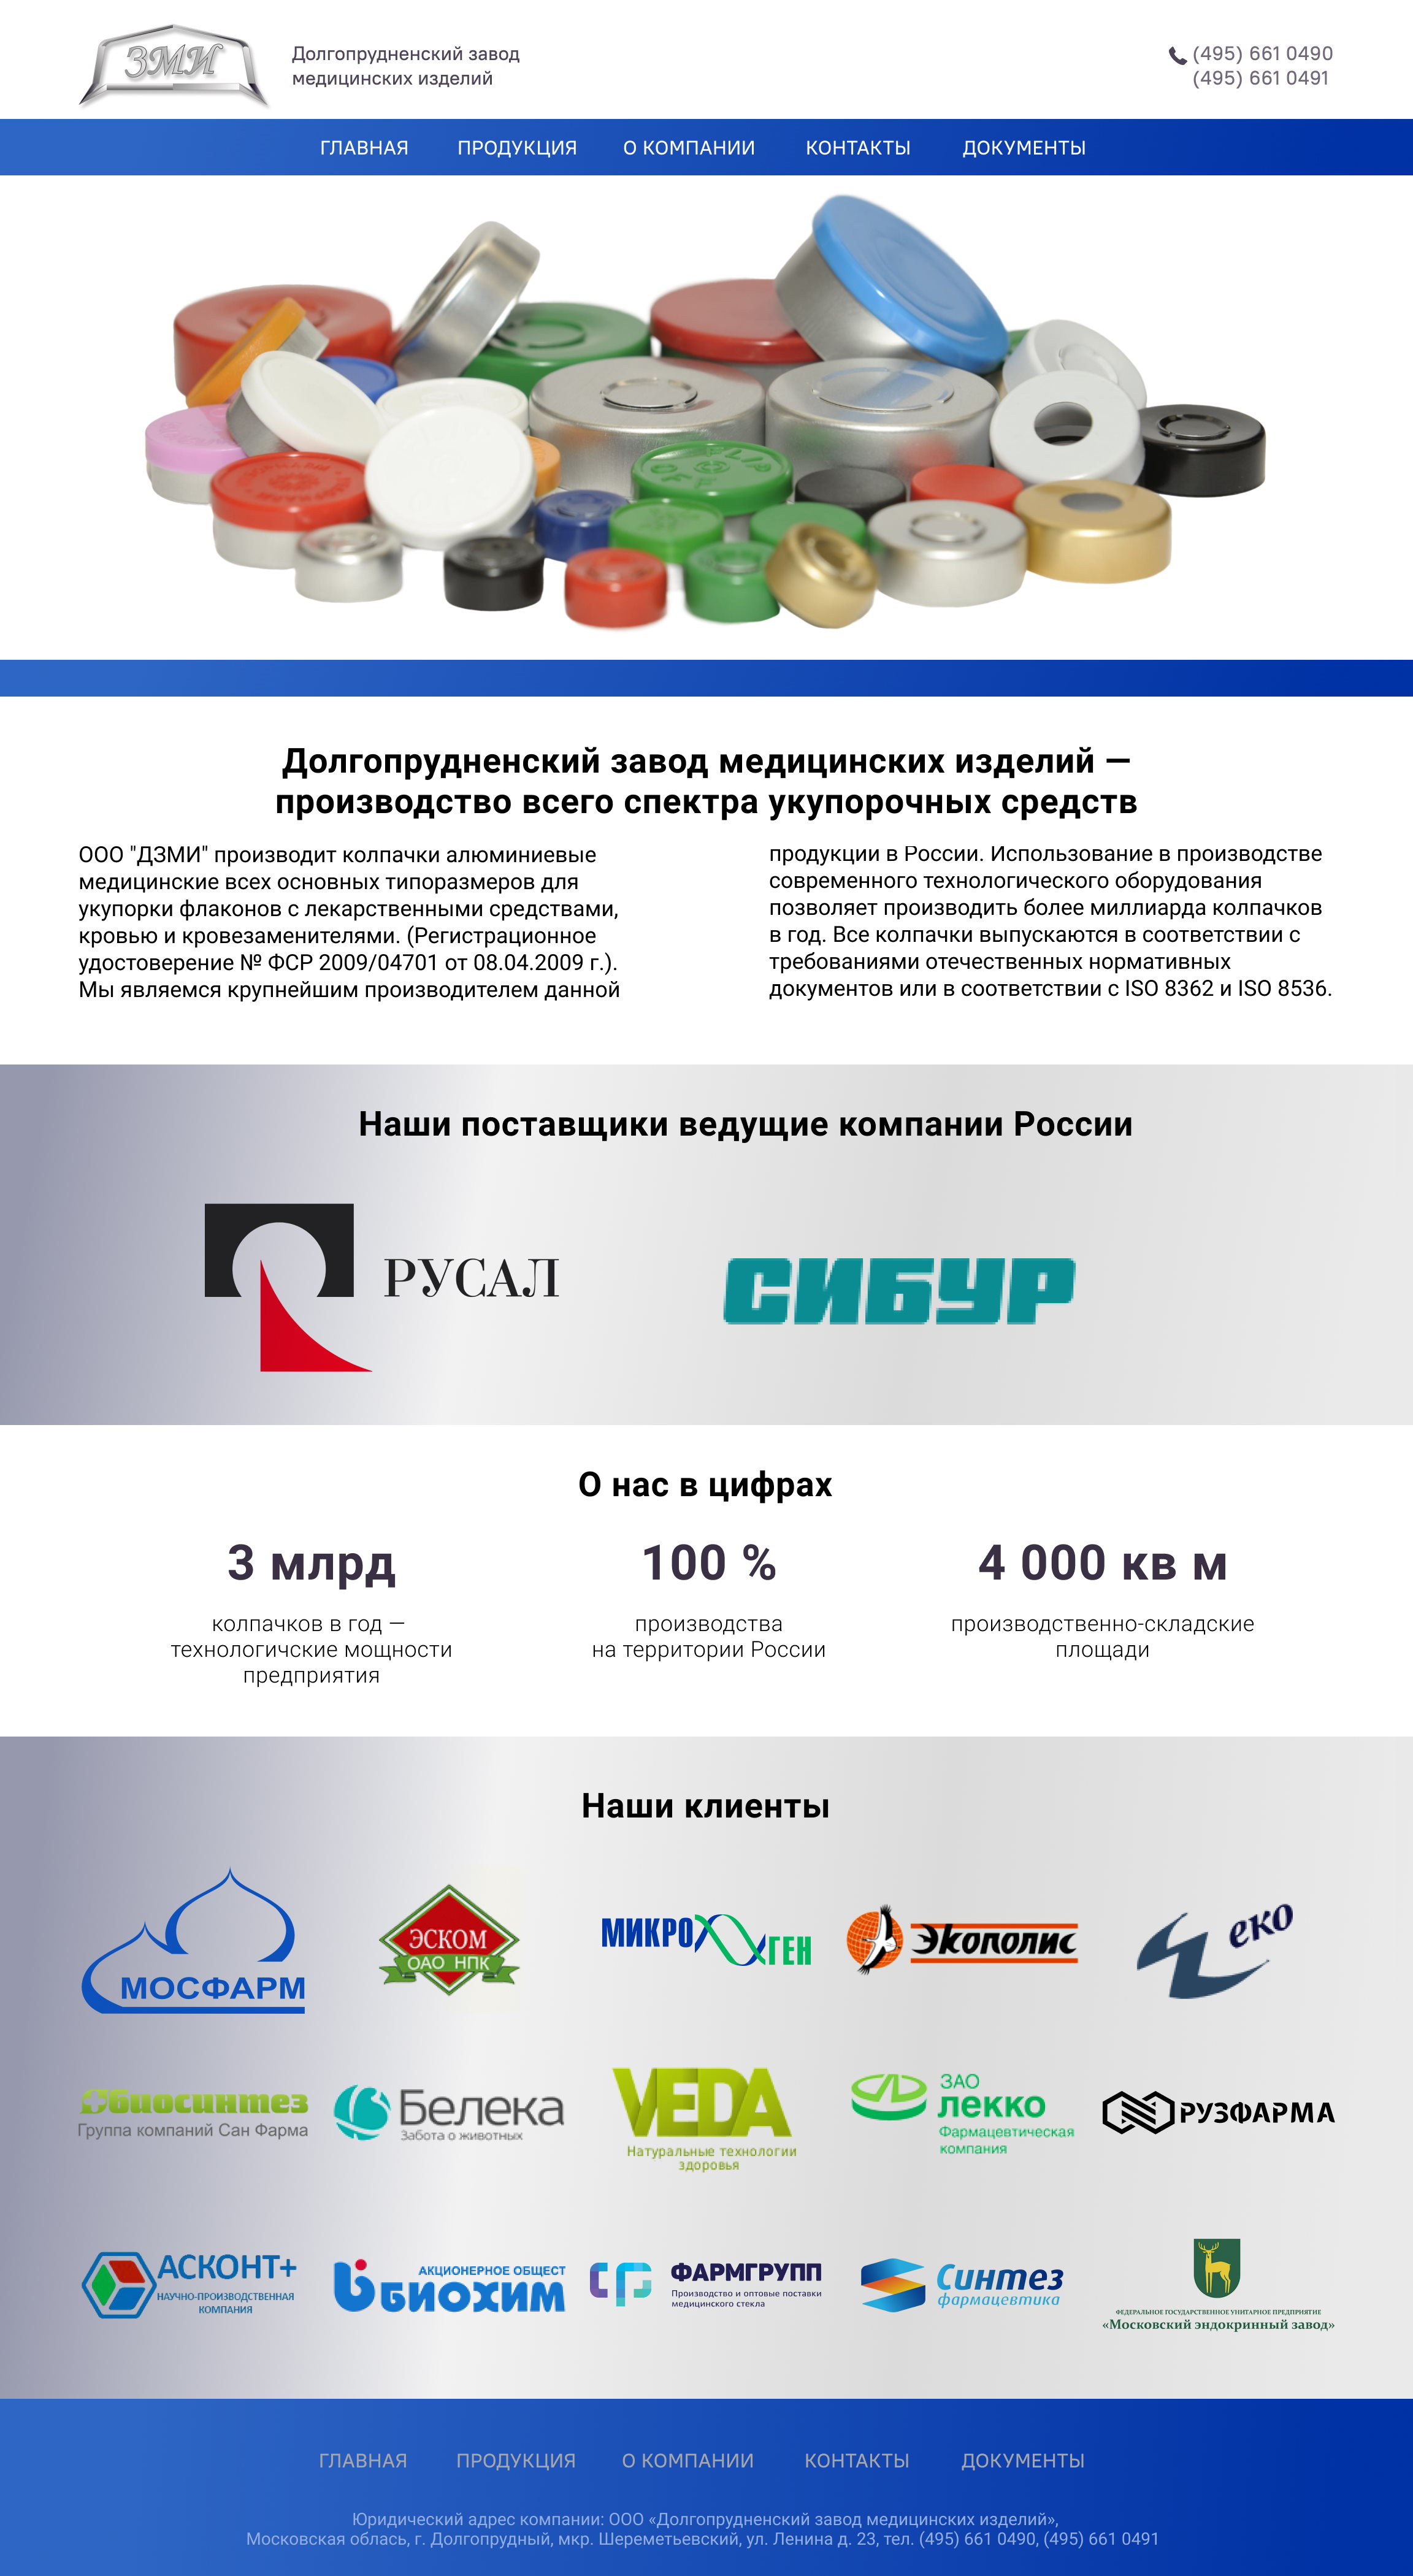 LLC Dolgoprudnensky Plant of Medical Products